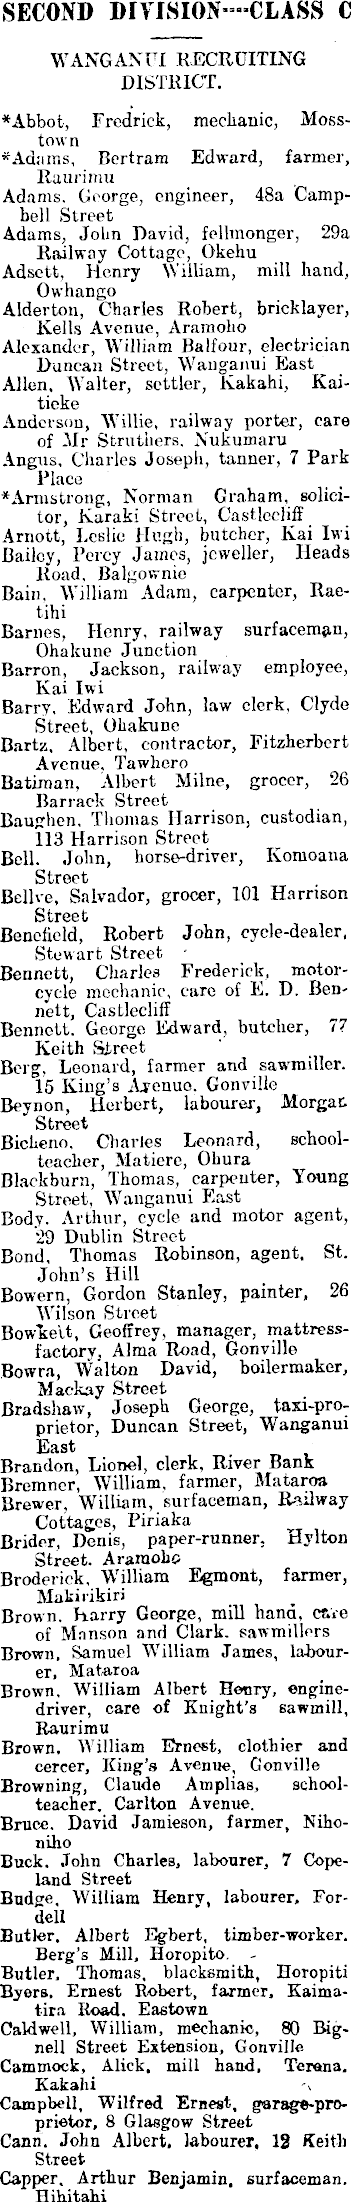 Papers Past | Newspapers | Wanganui Herald | 19 June 1918 | THE BALLOT